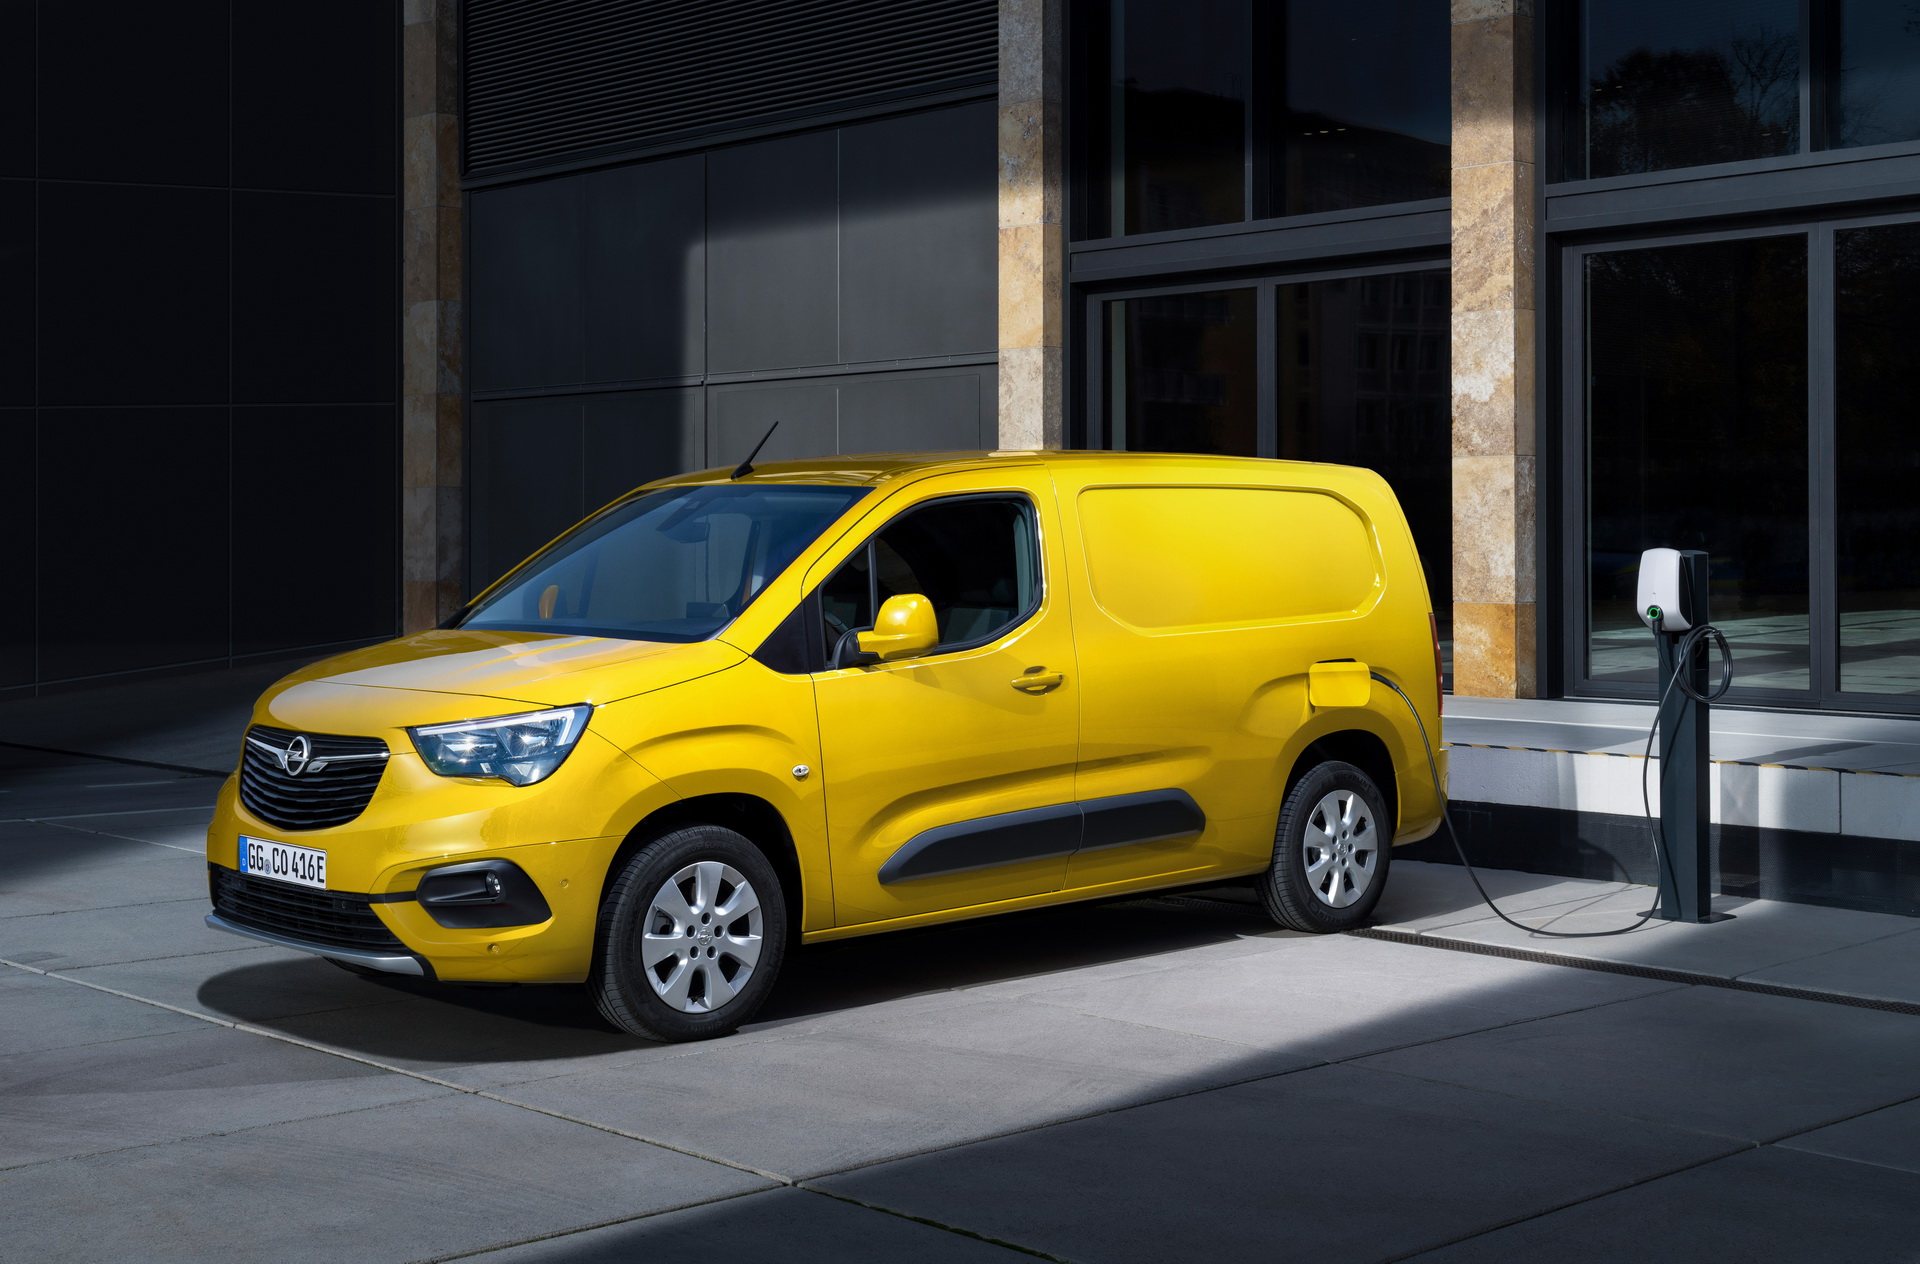 2021 Opel Combo-e Elektrikli Hafif Ticari resim galerisi (24.01.2021)